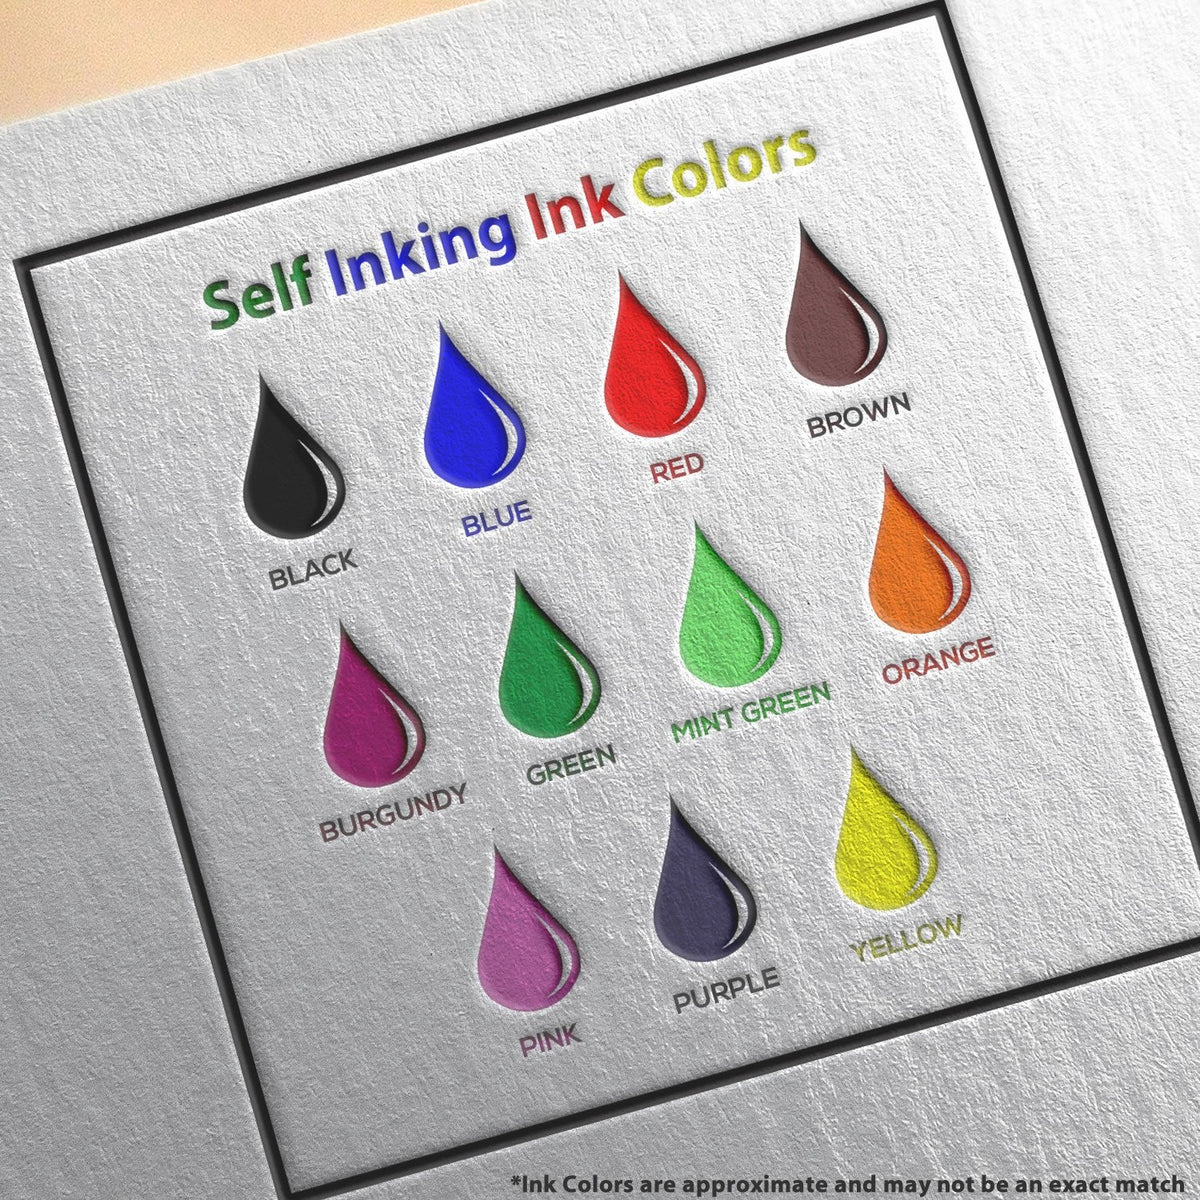 Self Inking Pkg Of Stamp Ink Color Options